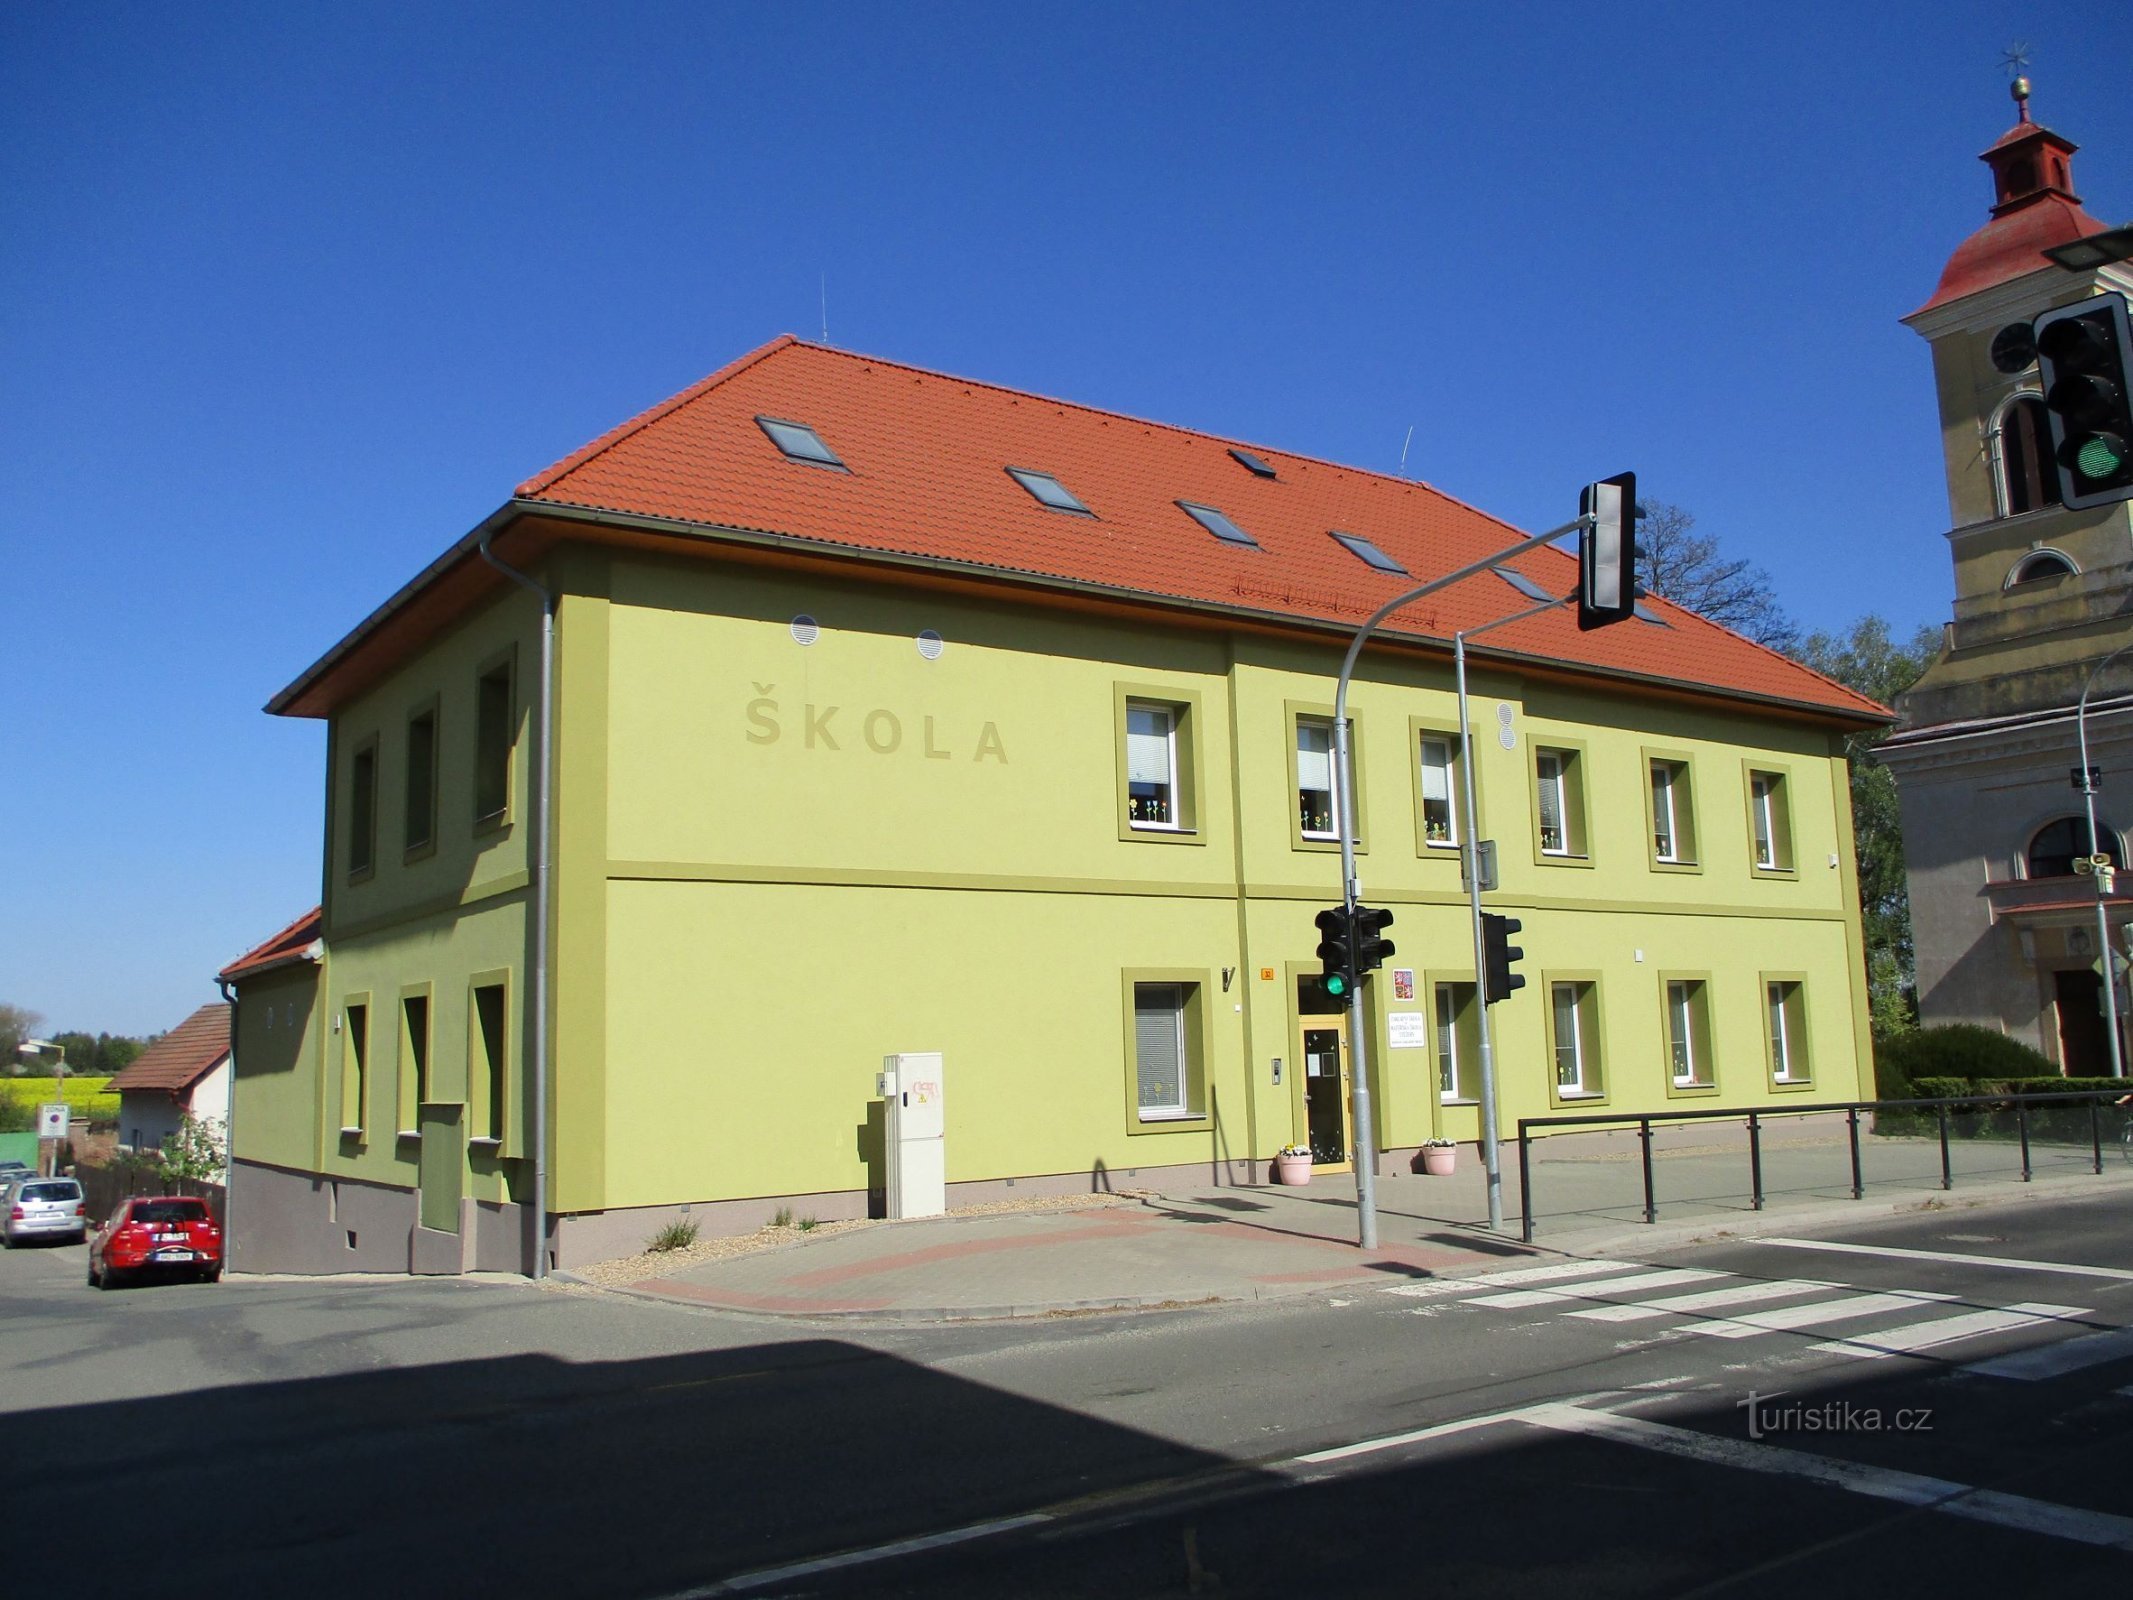 Школа (Stežery, 27.4.2020)